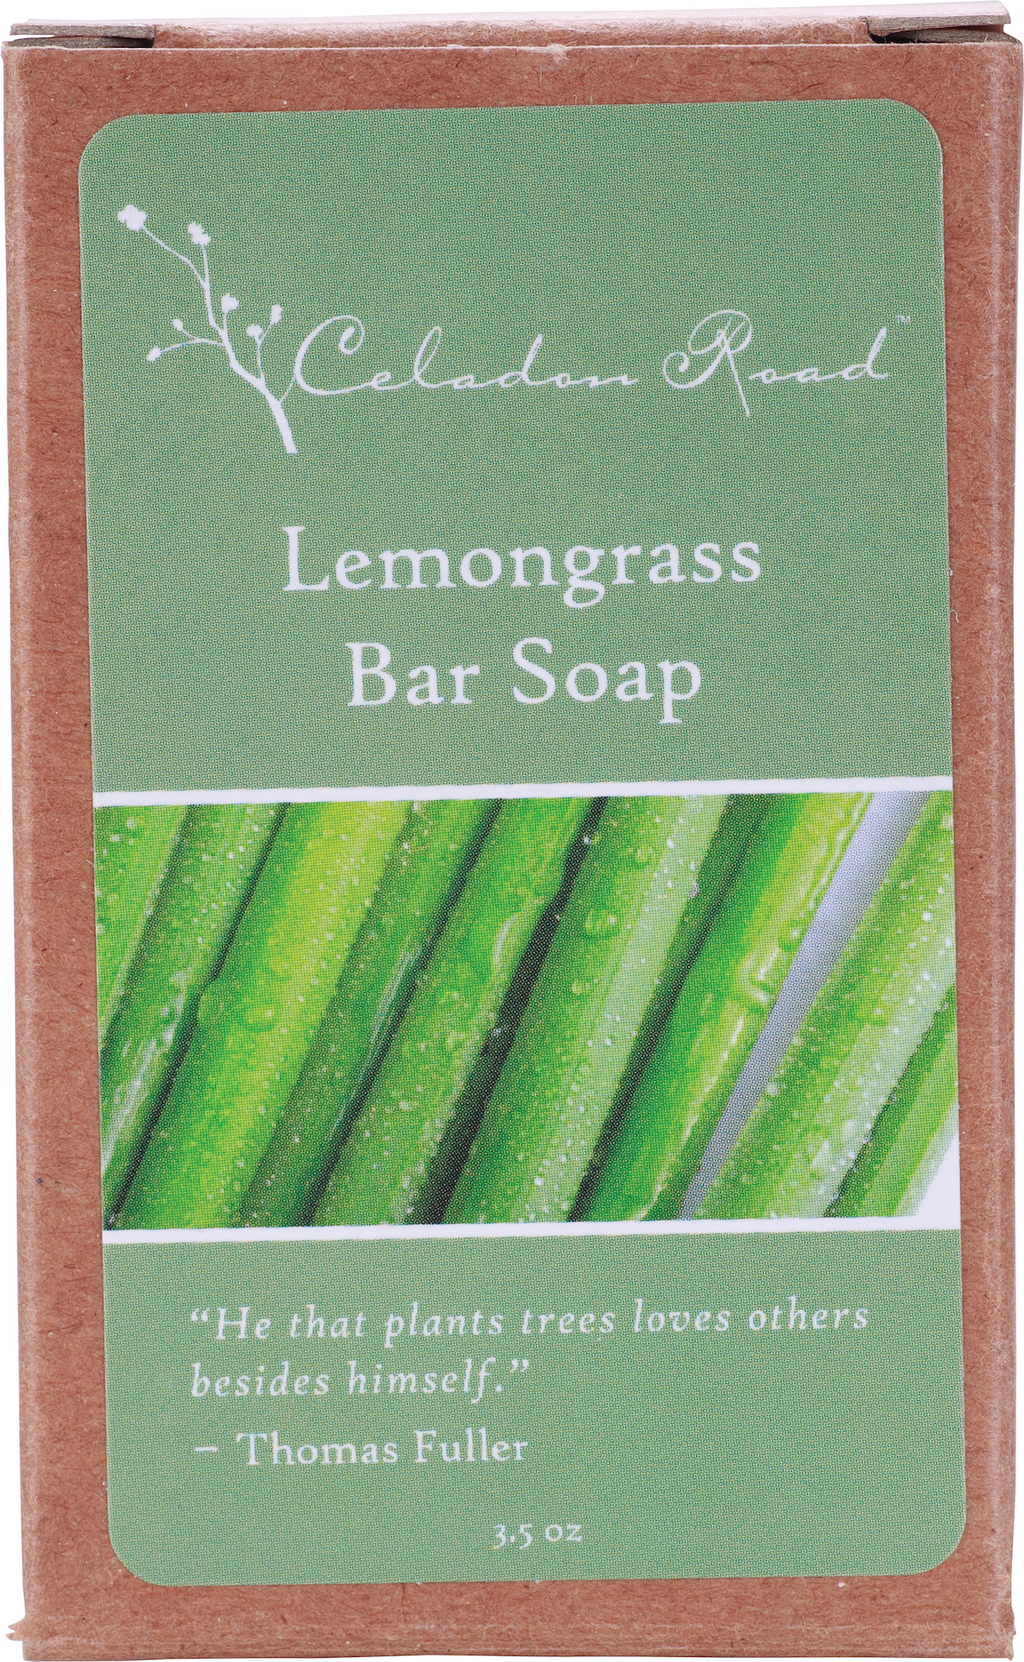 Lemongrass Bar Soap- Celadon Road- www.celadonroad.com